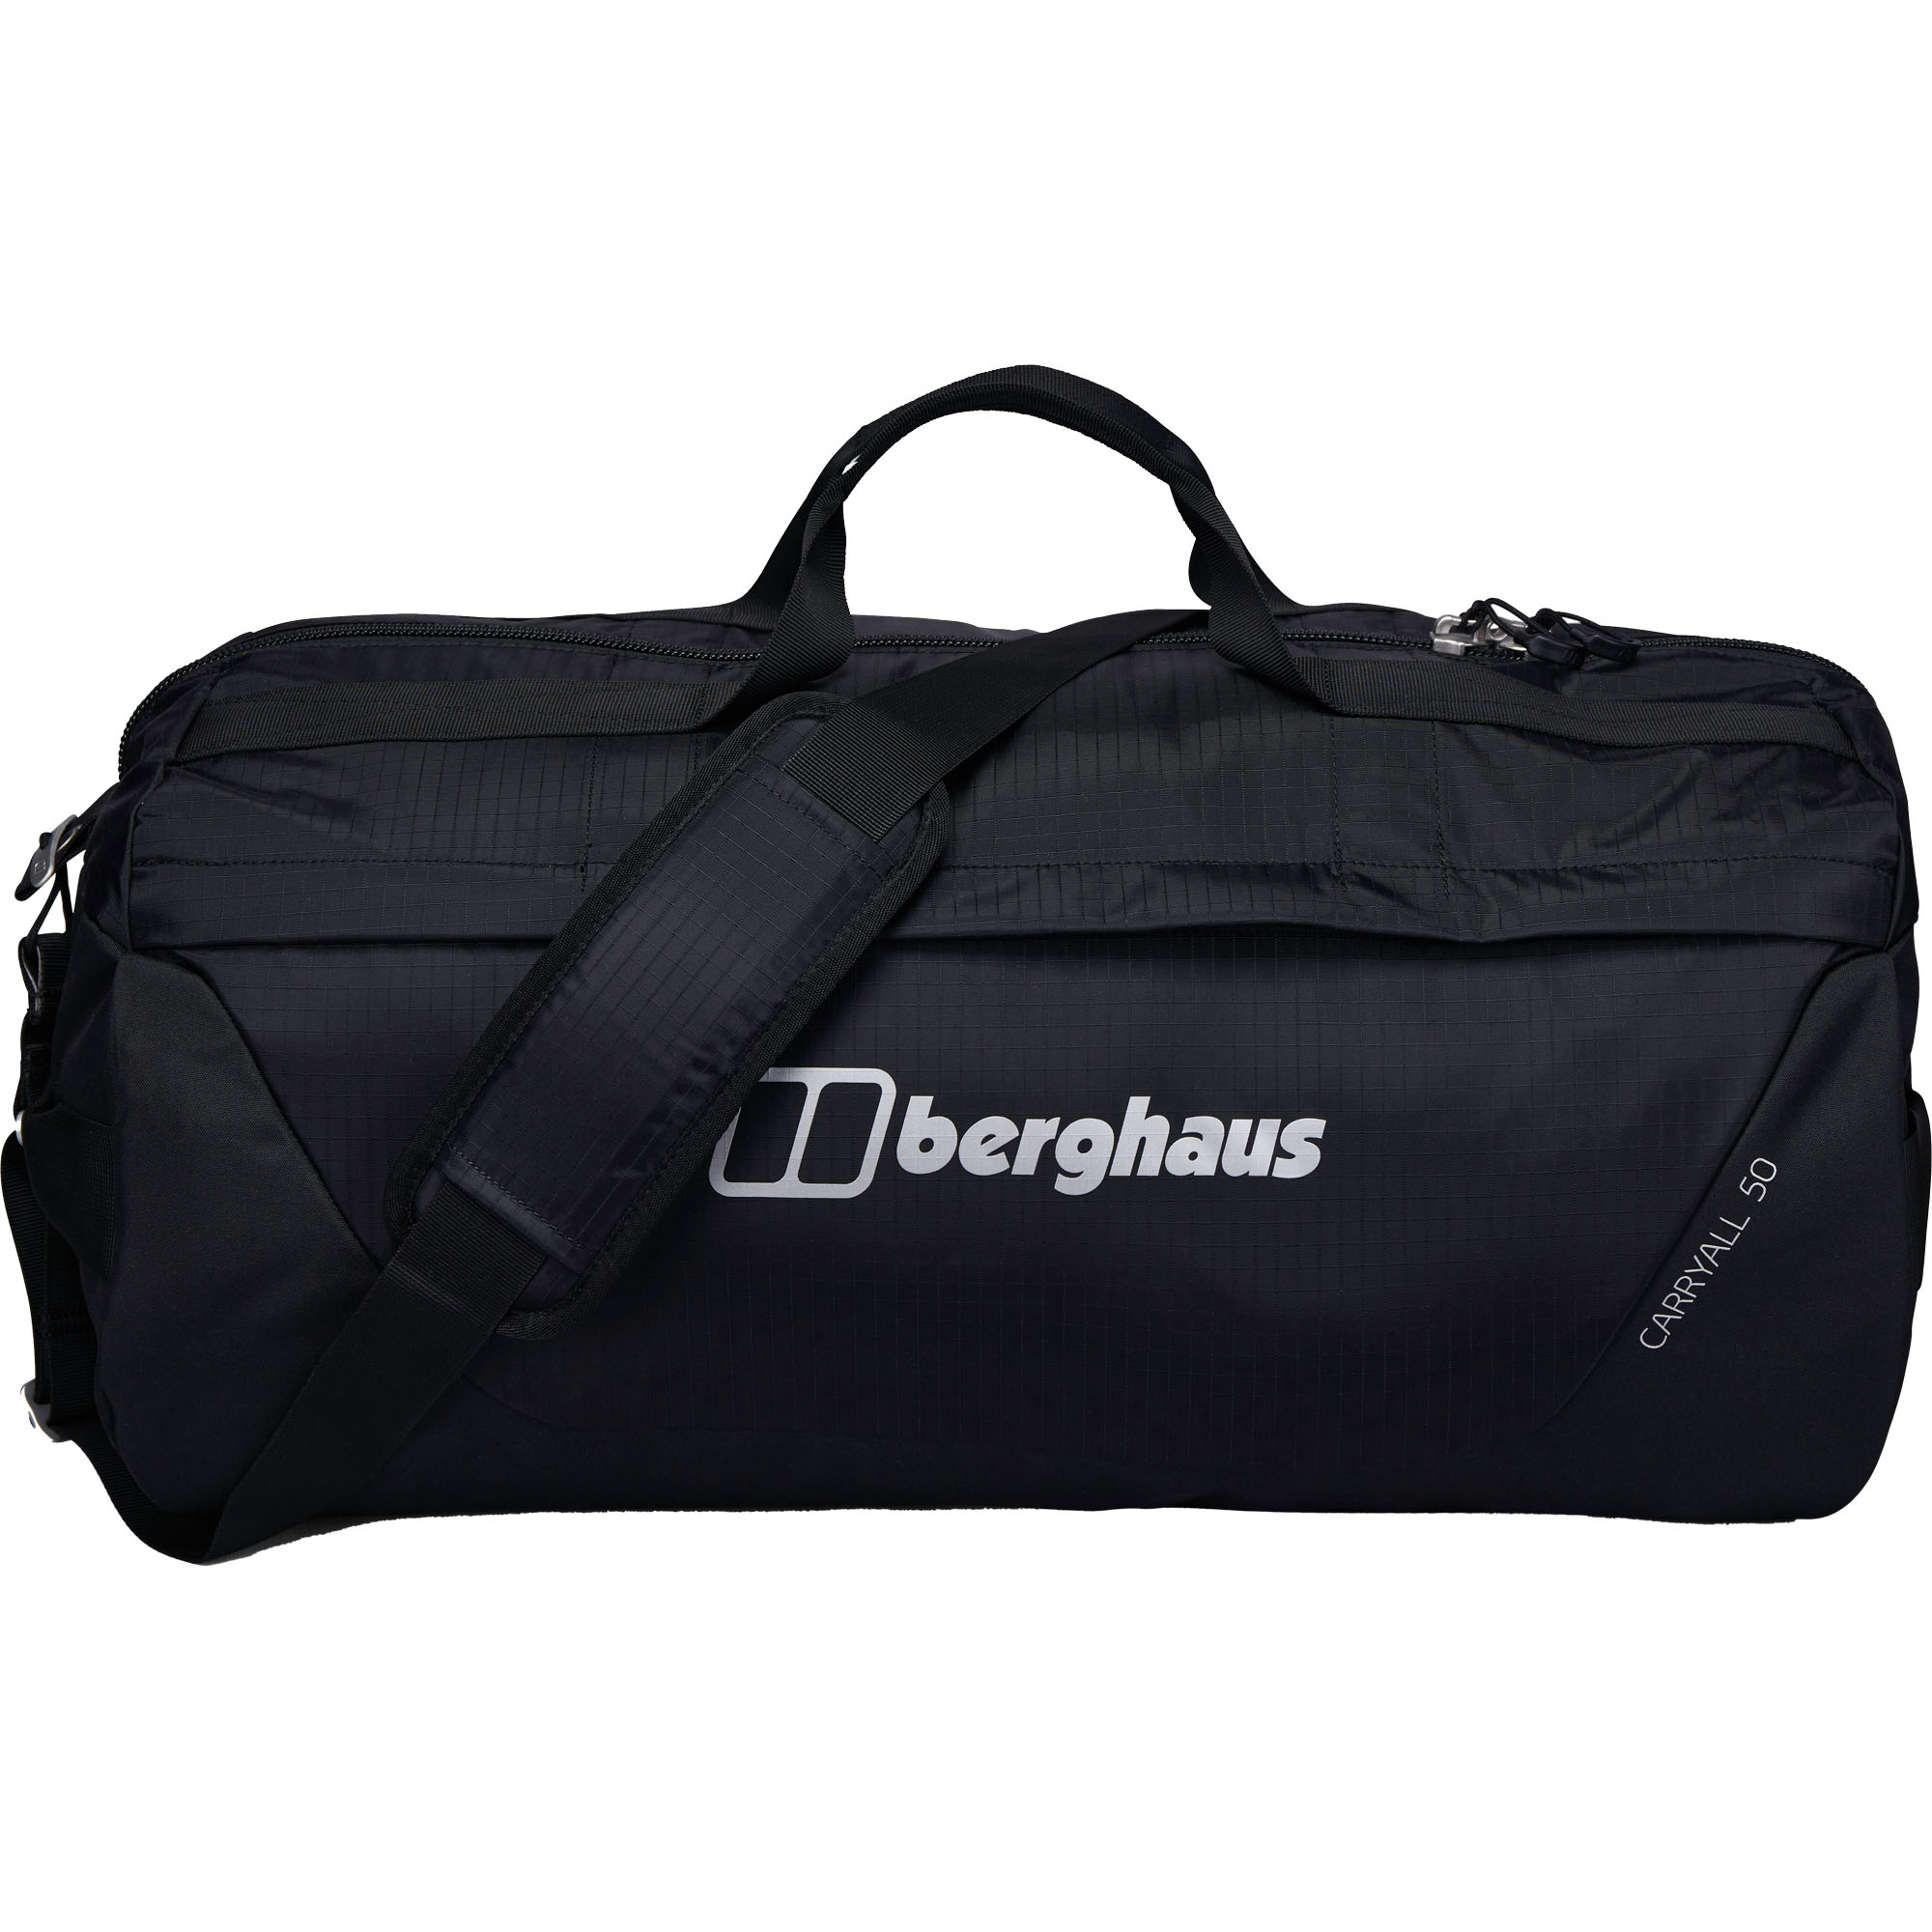 Berghaus Carryall Mule 50 Duffel Travel Bag 50